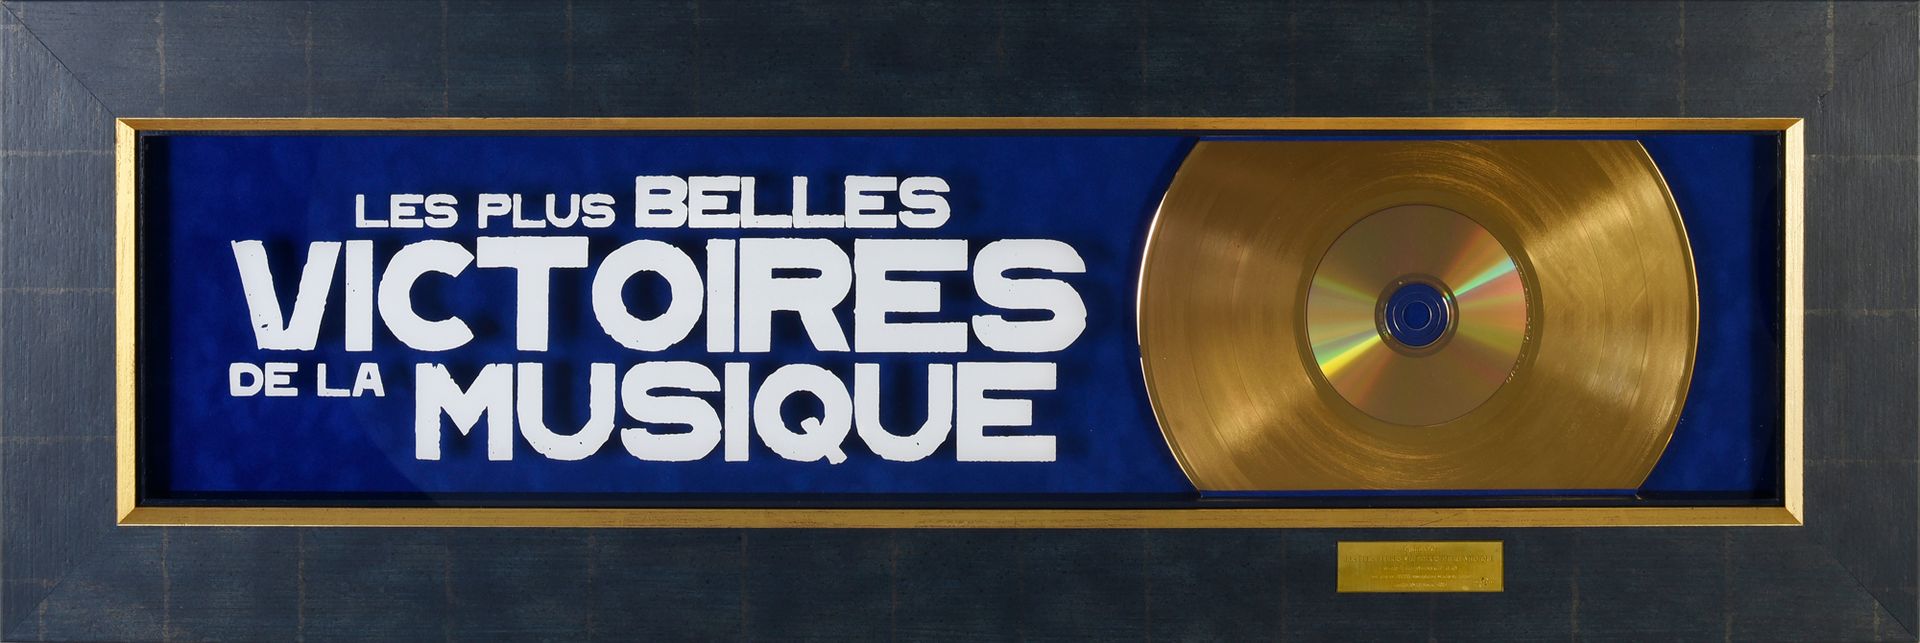 Null VICTOIRE DE LA MUSIQUE: 1 Goldene Schallplatte für das Album "Les plus bell&hellip;